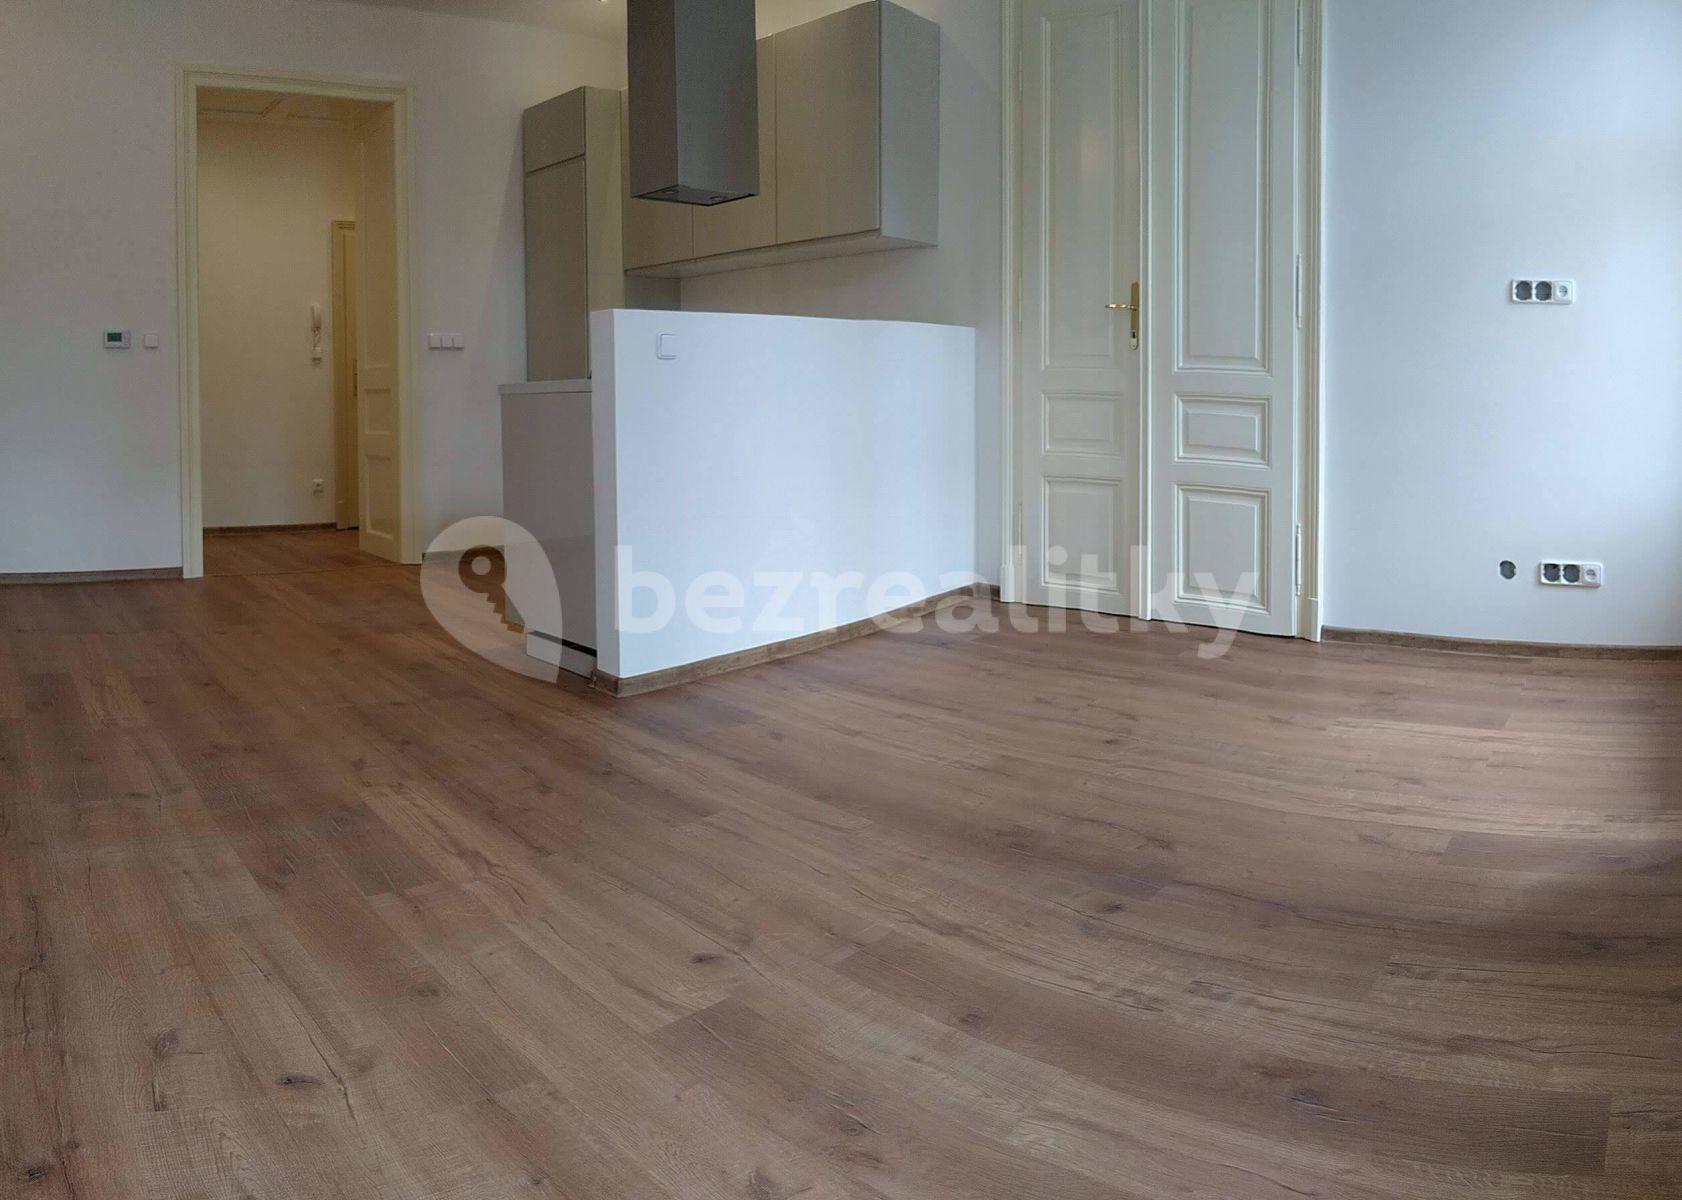 1 bedroom with open-plan kitchen flat to rent, 64 m², Štefánikova, Brno, Jihomoravský Region